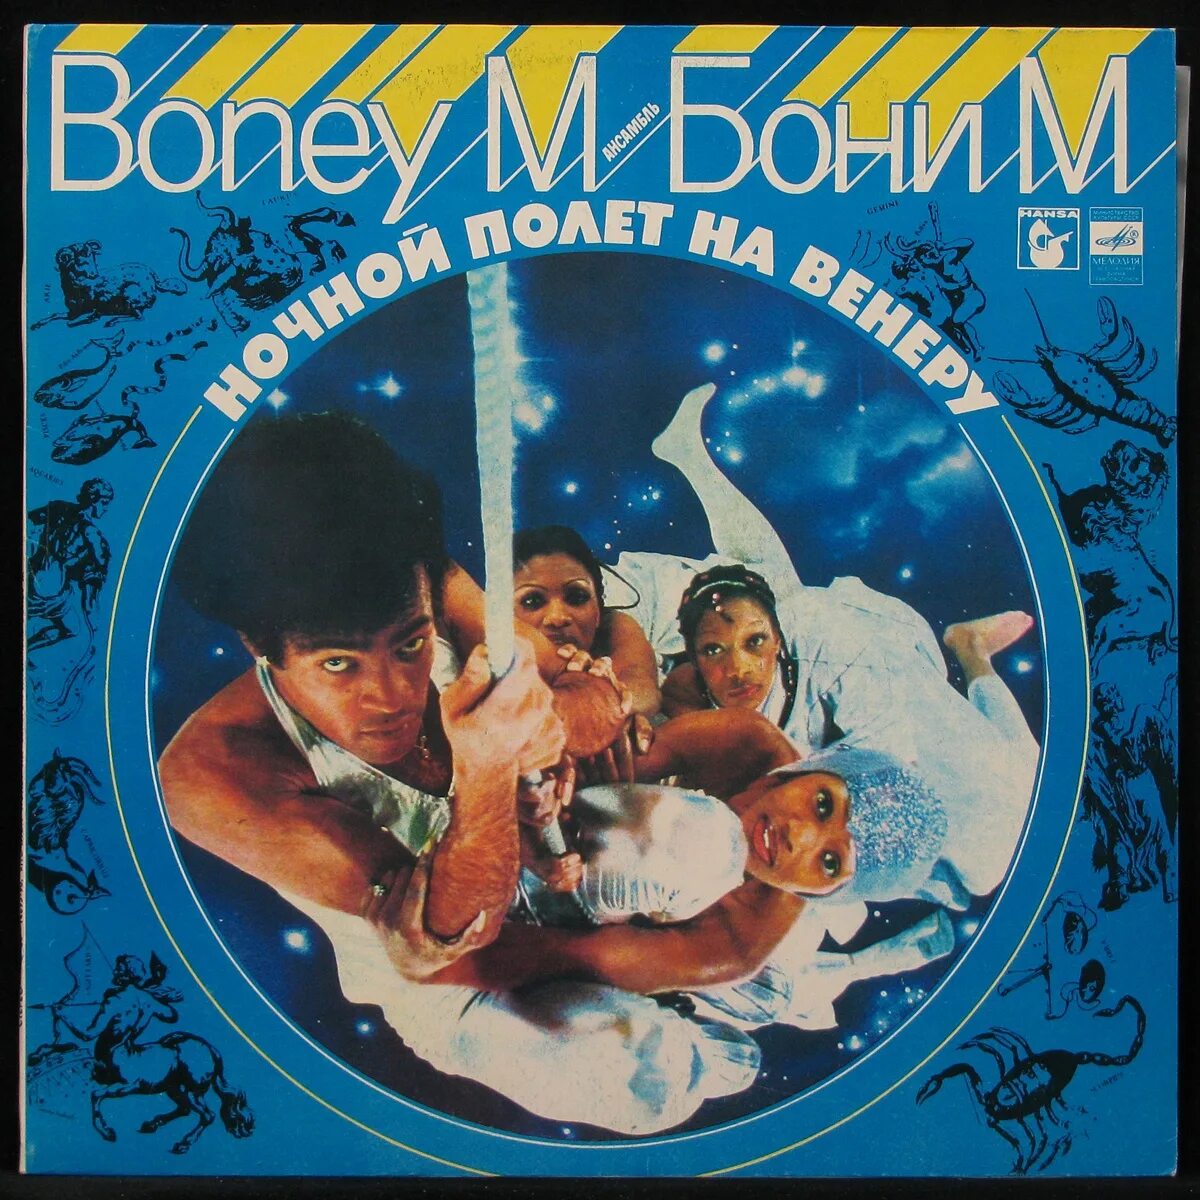 Boney m Venus Nightflight LP. Boney m Nightflight to Venus 1978 пластинки. Boney m пластинка. Бони м. ночной полет на Венеру ("мелодия", с60-14895-96] 1980) обложка. Nightflight to venus boney m